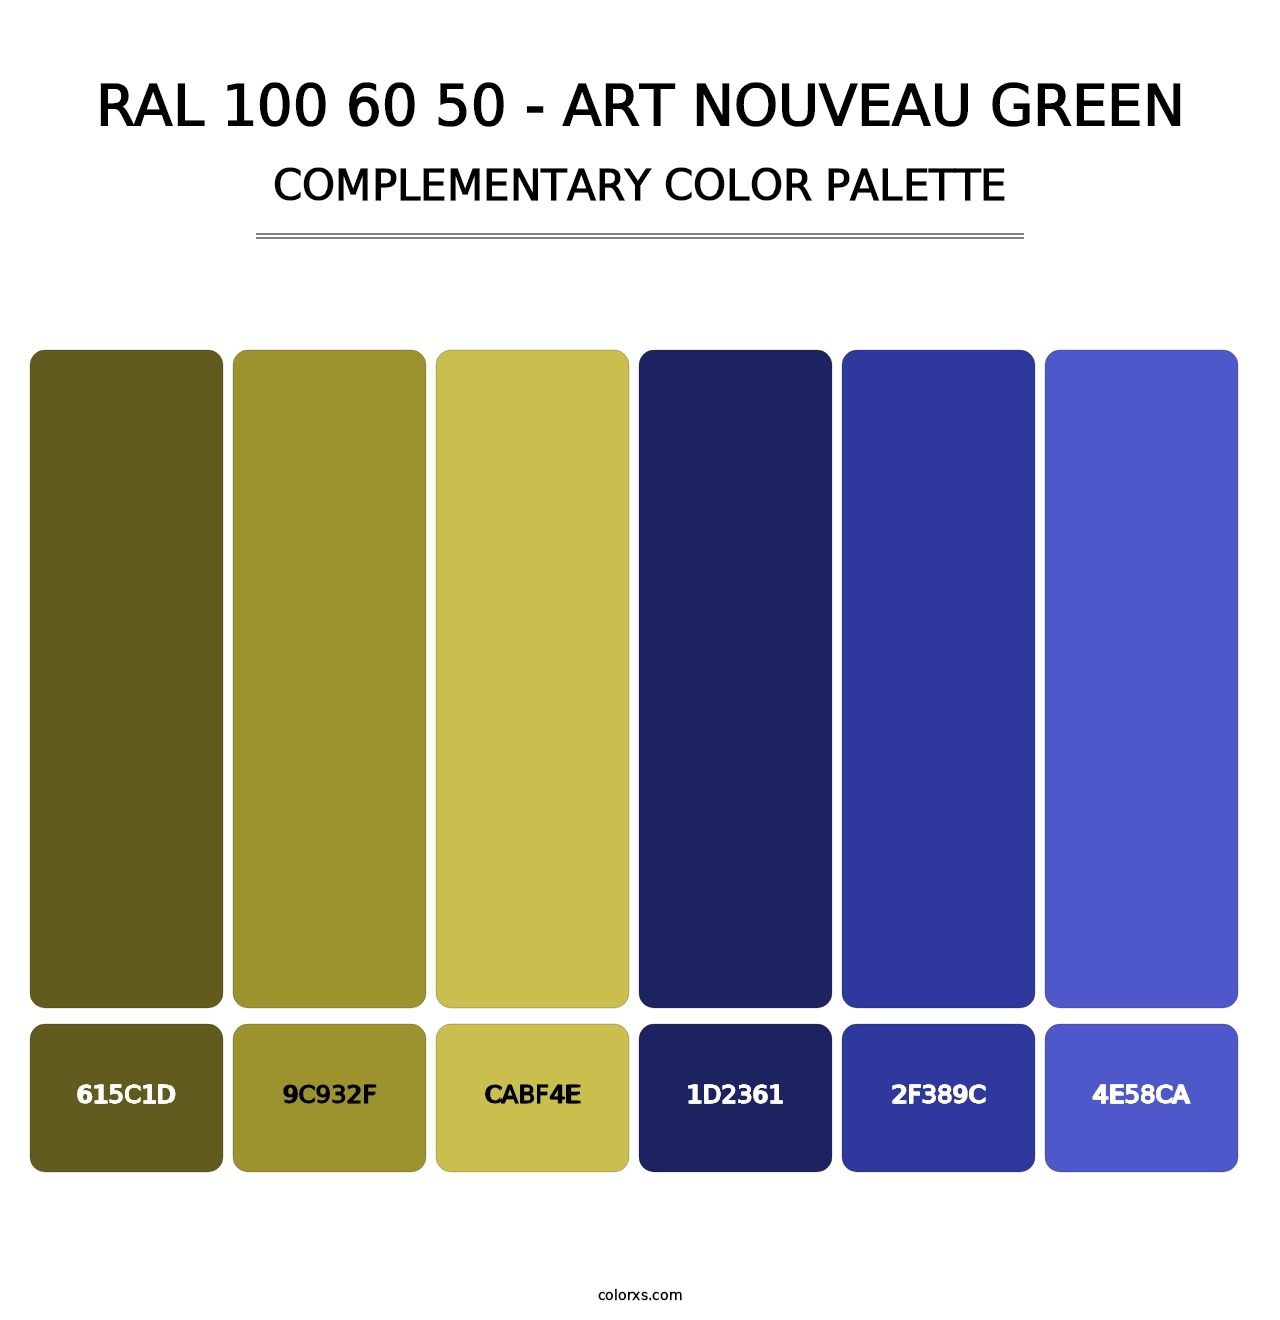 RAL 100 60 50 - Art Nouveau Green - Complementary Color Palette